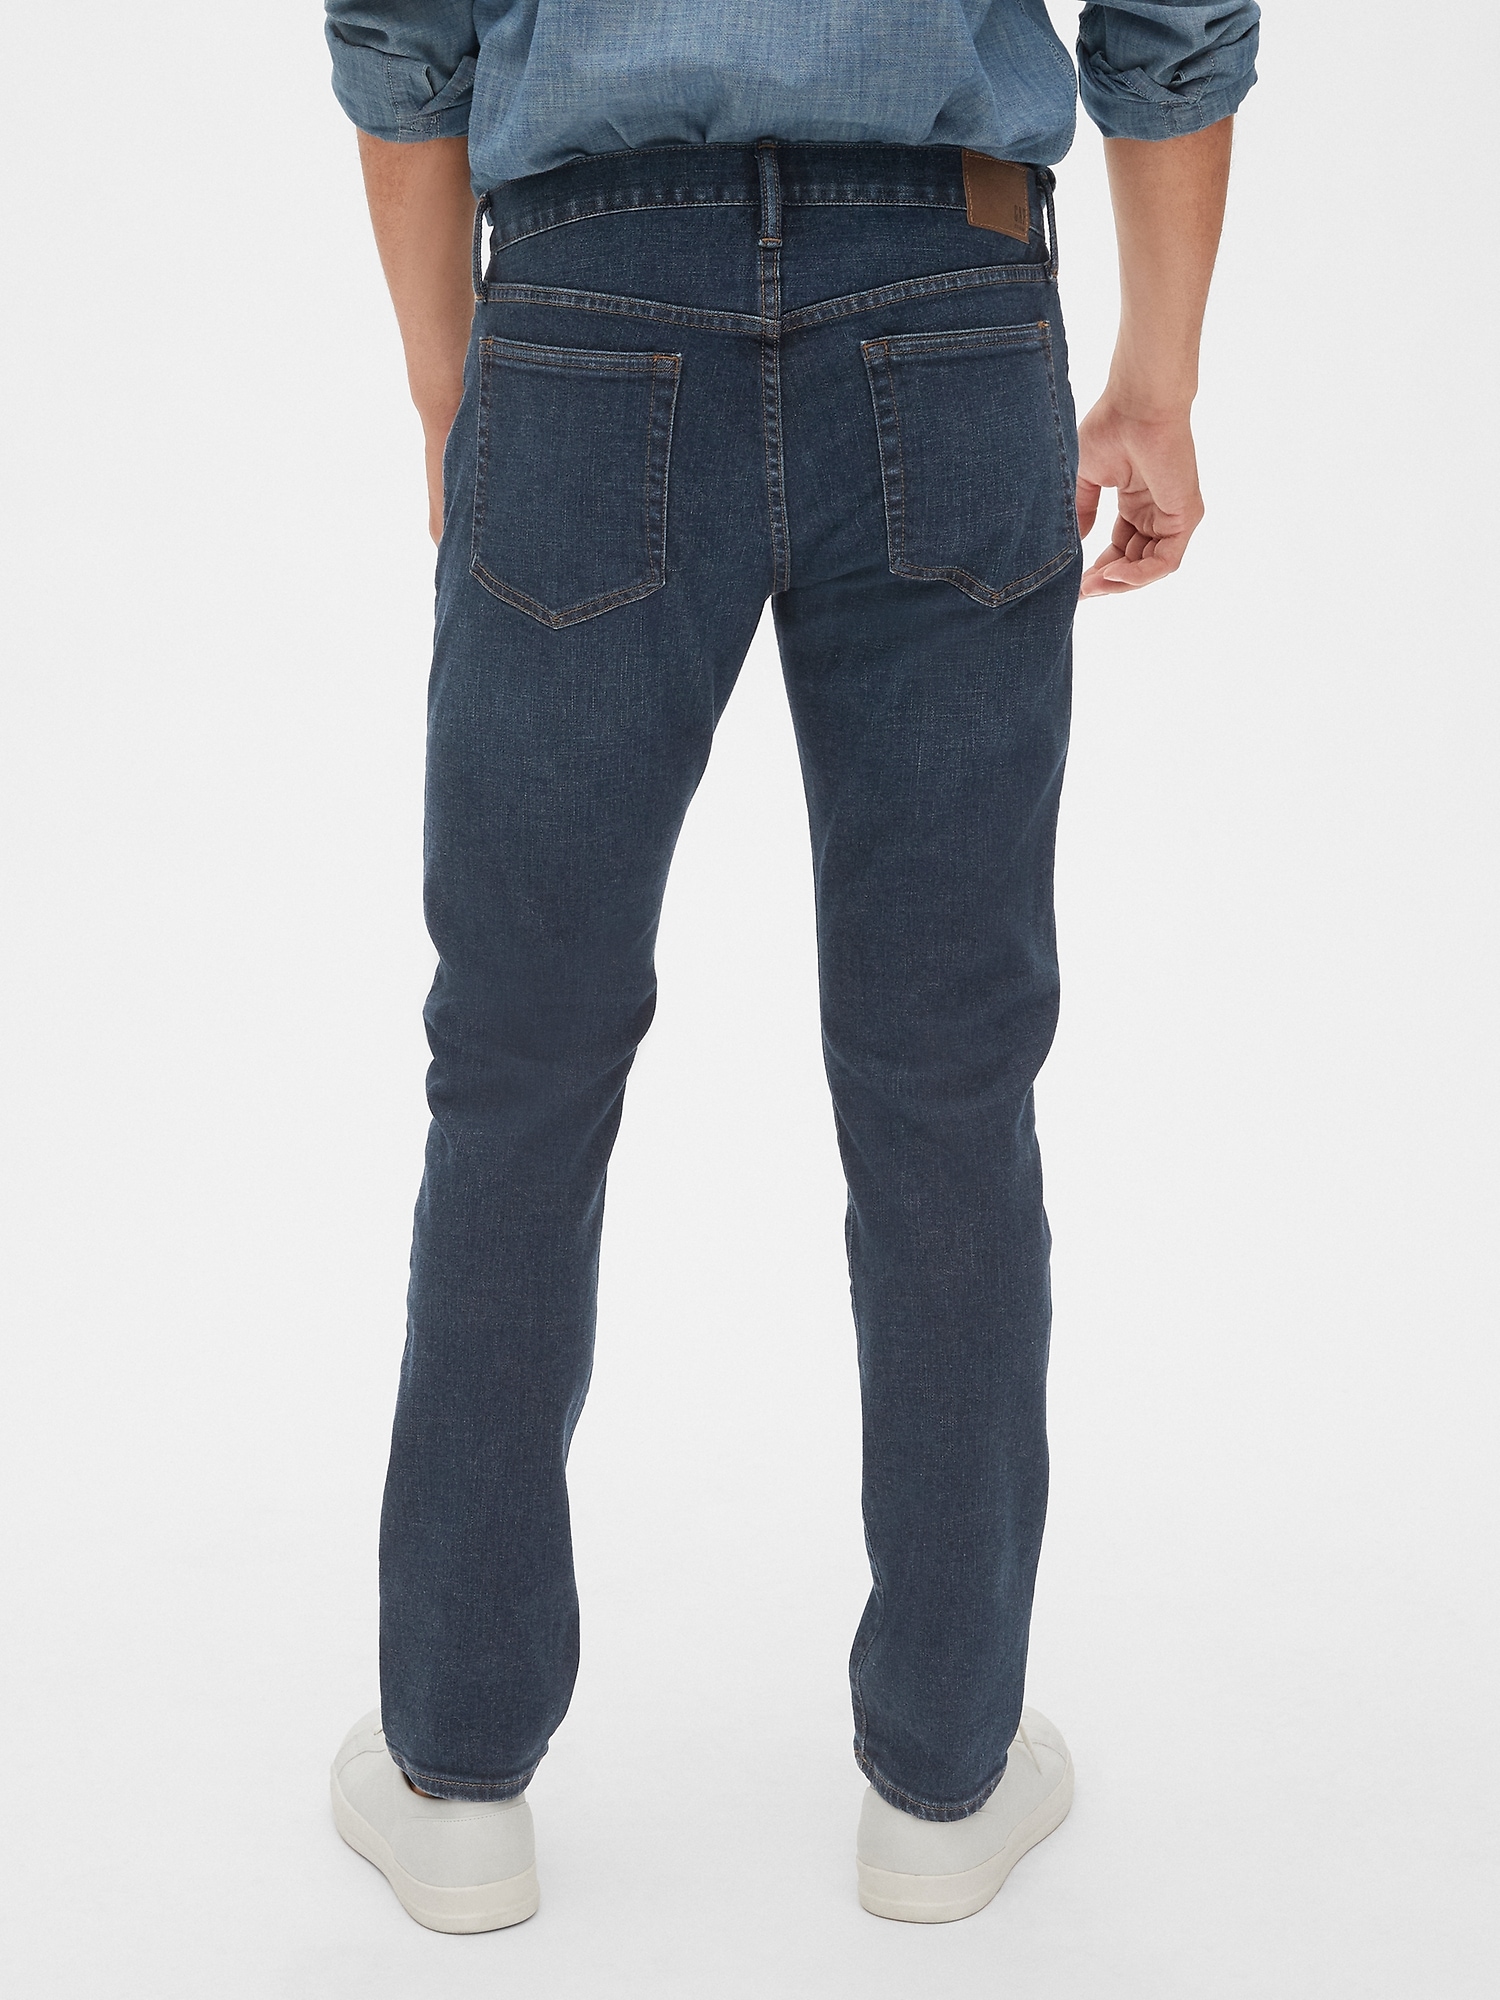 gap jeans 54023